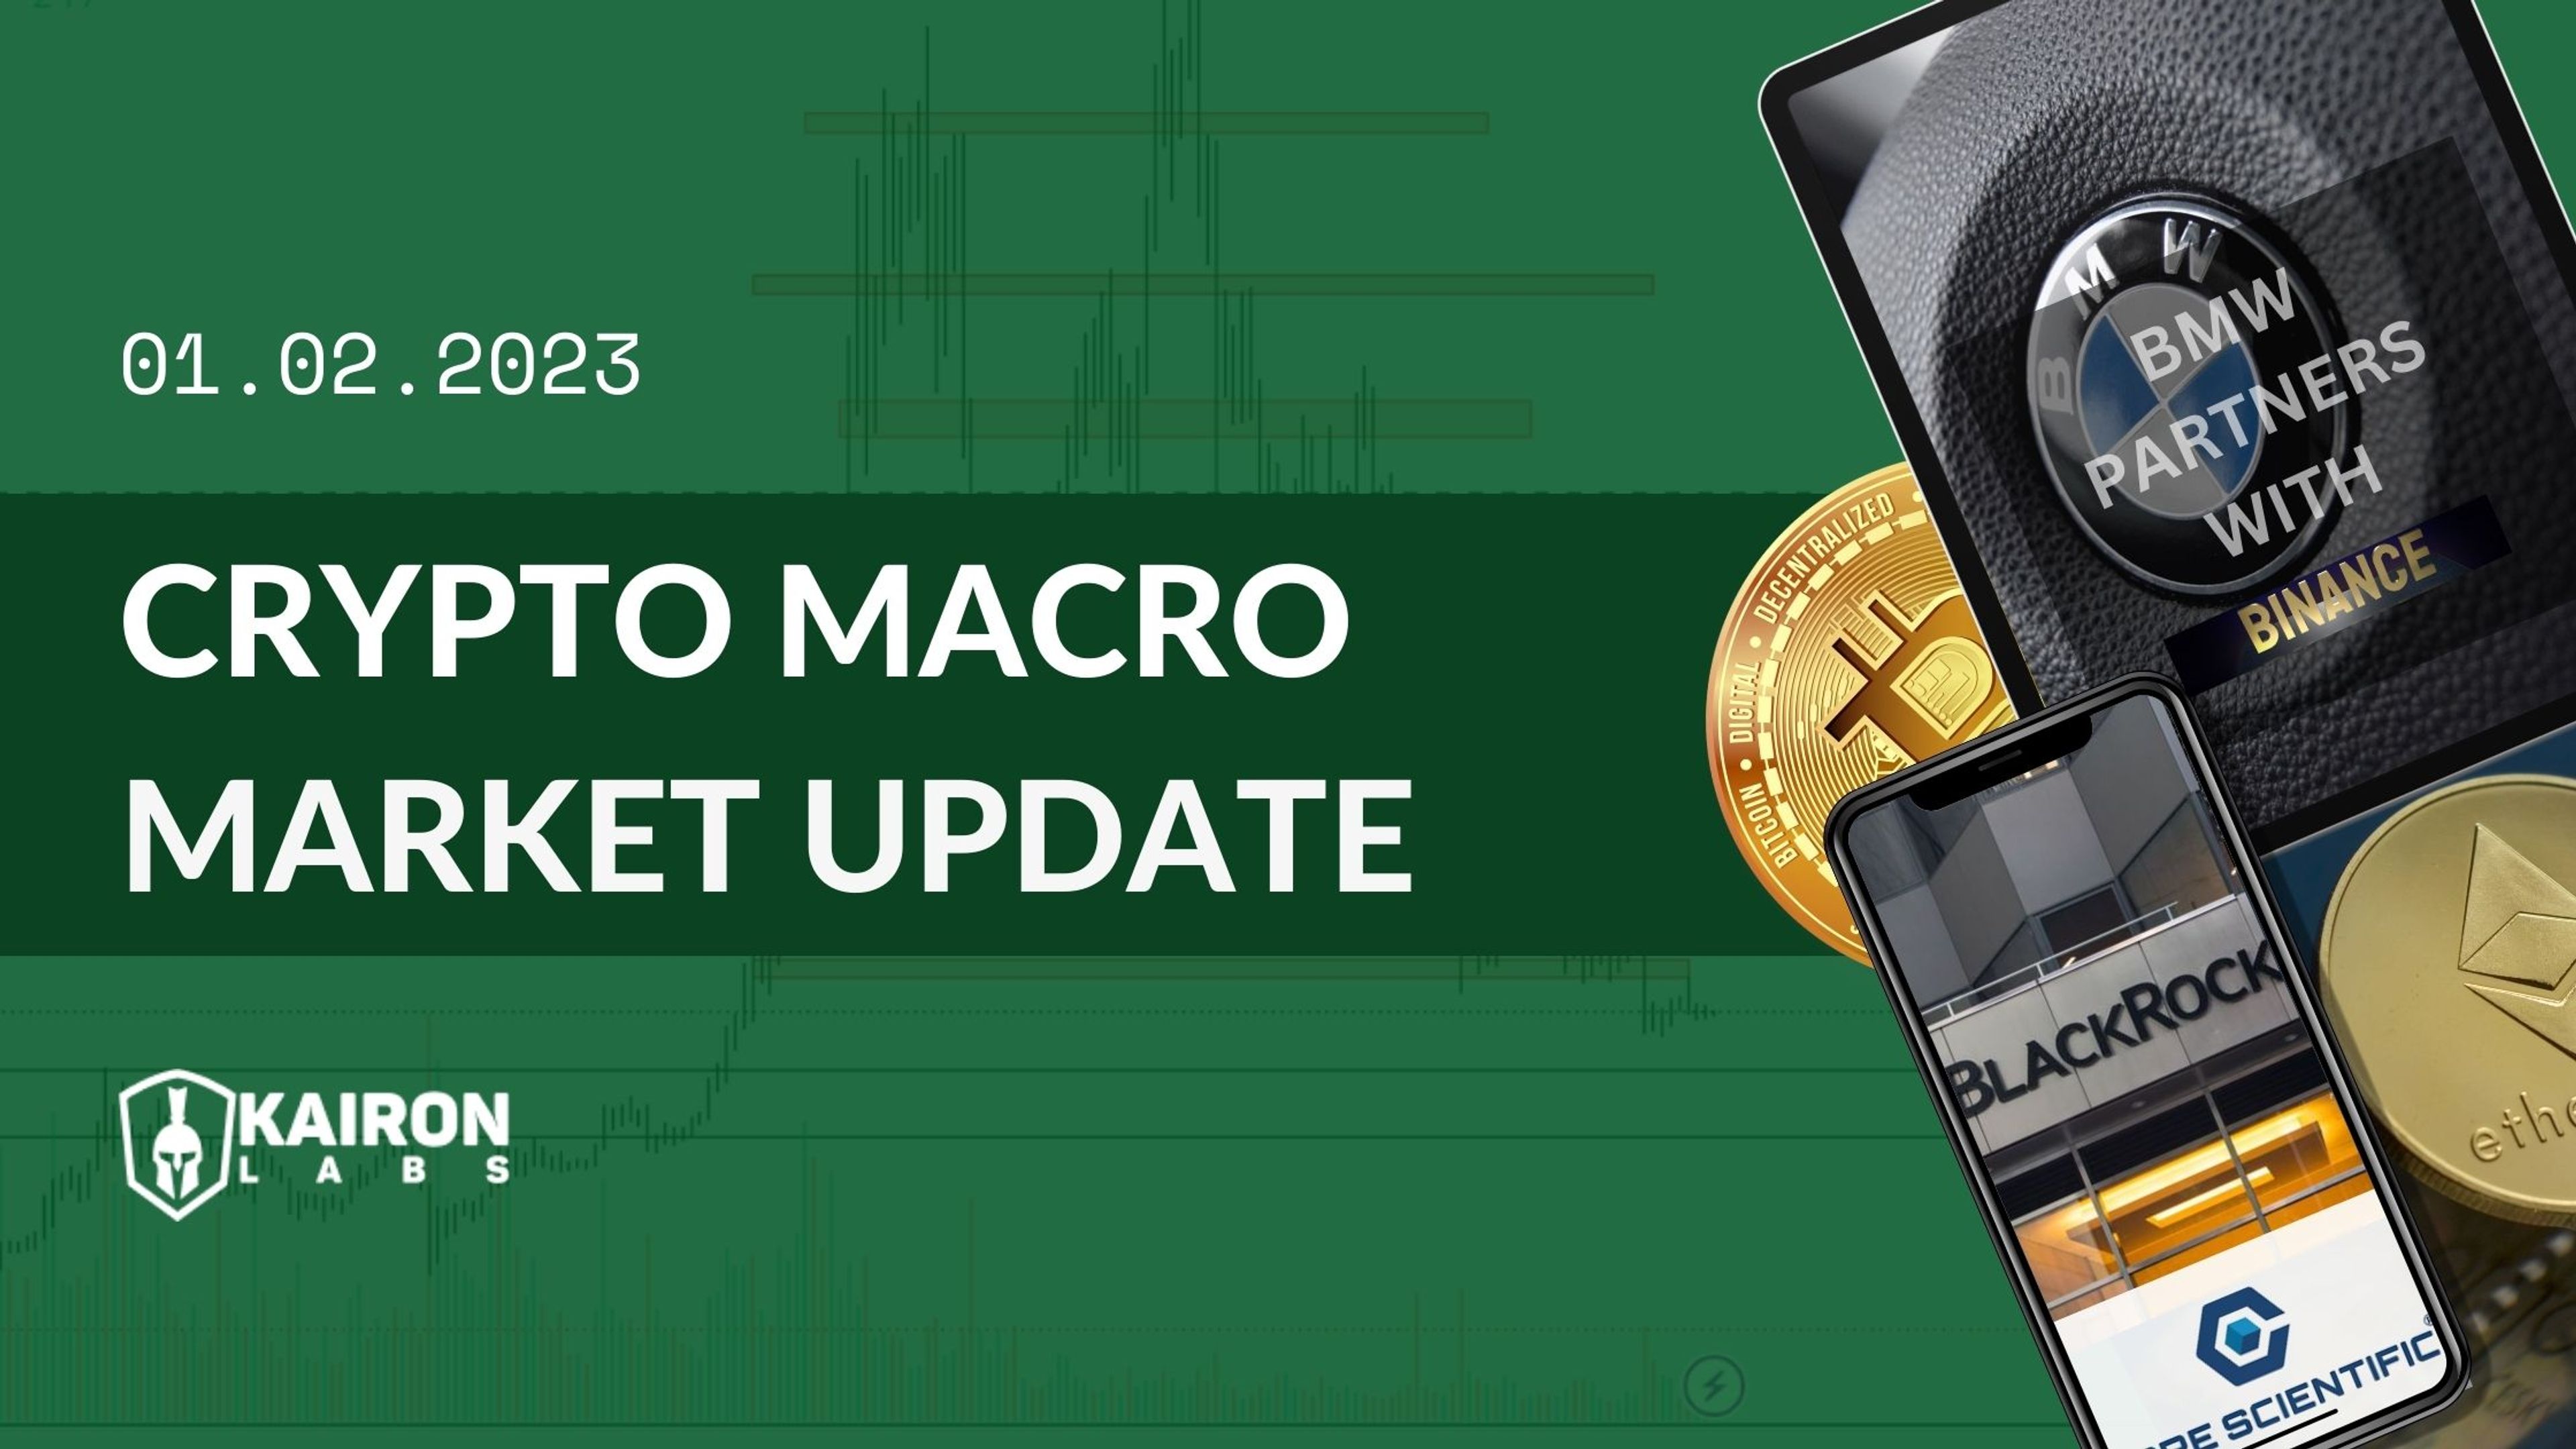 Crypto Macro Market update - January 2, 2023 - Karion Labs Market Making